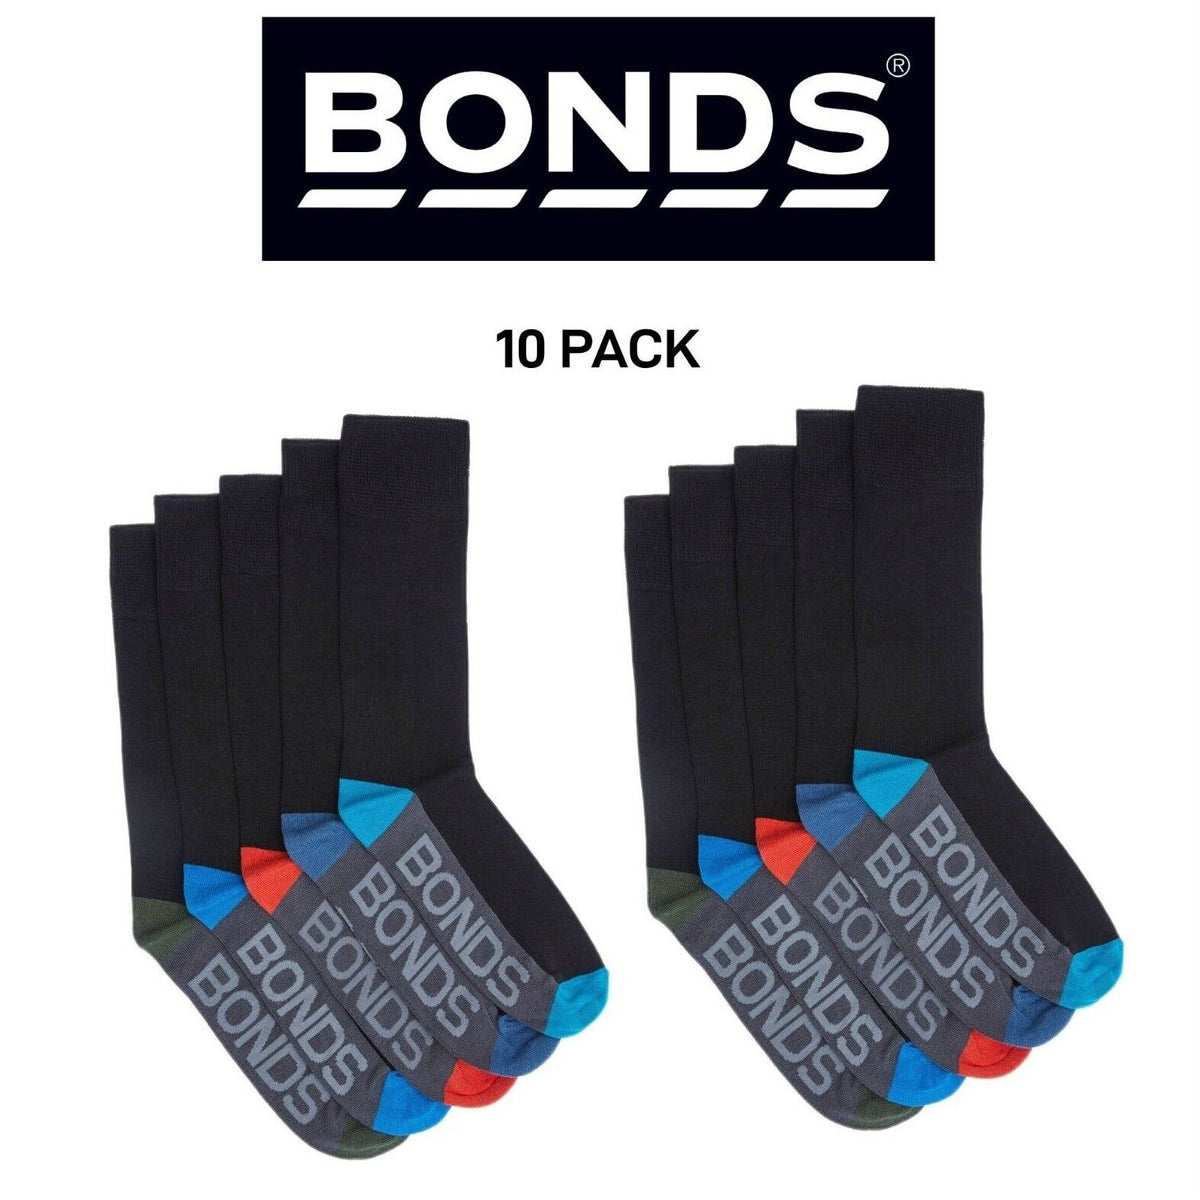 Bonds Mens Bamboo Crew Socks Reinforced Heel & Toe for Durability 10 Pack SZFQ5W